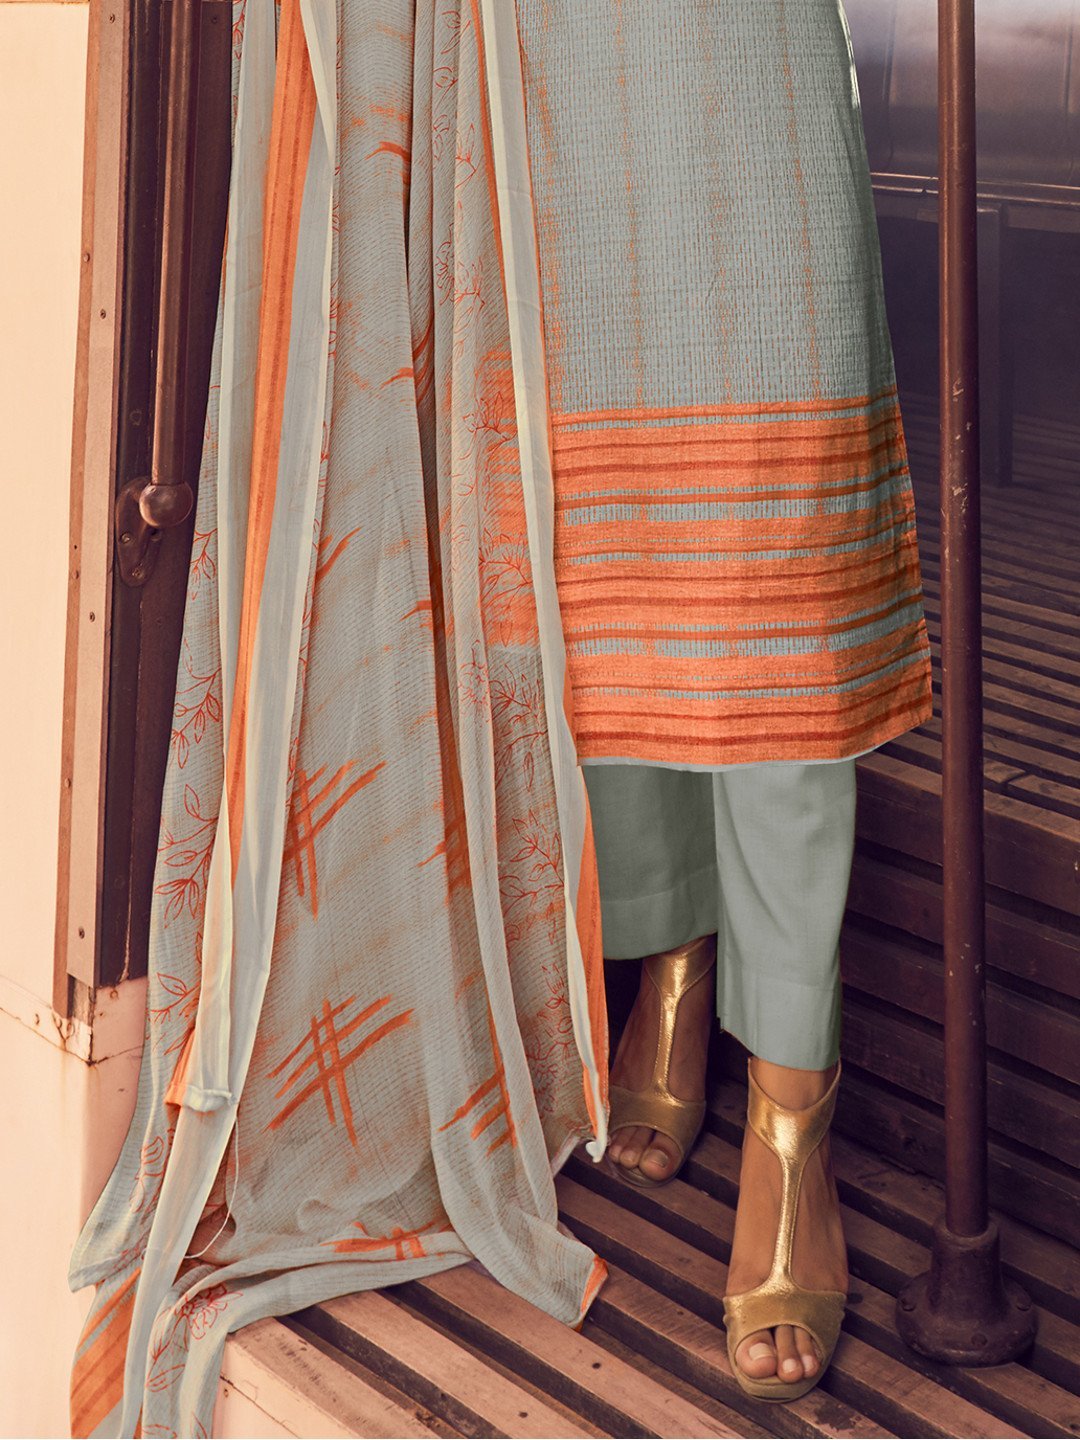 Unstitched Grey Cotton Salwar Suit Dress Material - Stilento